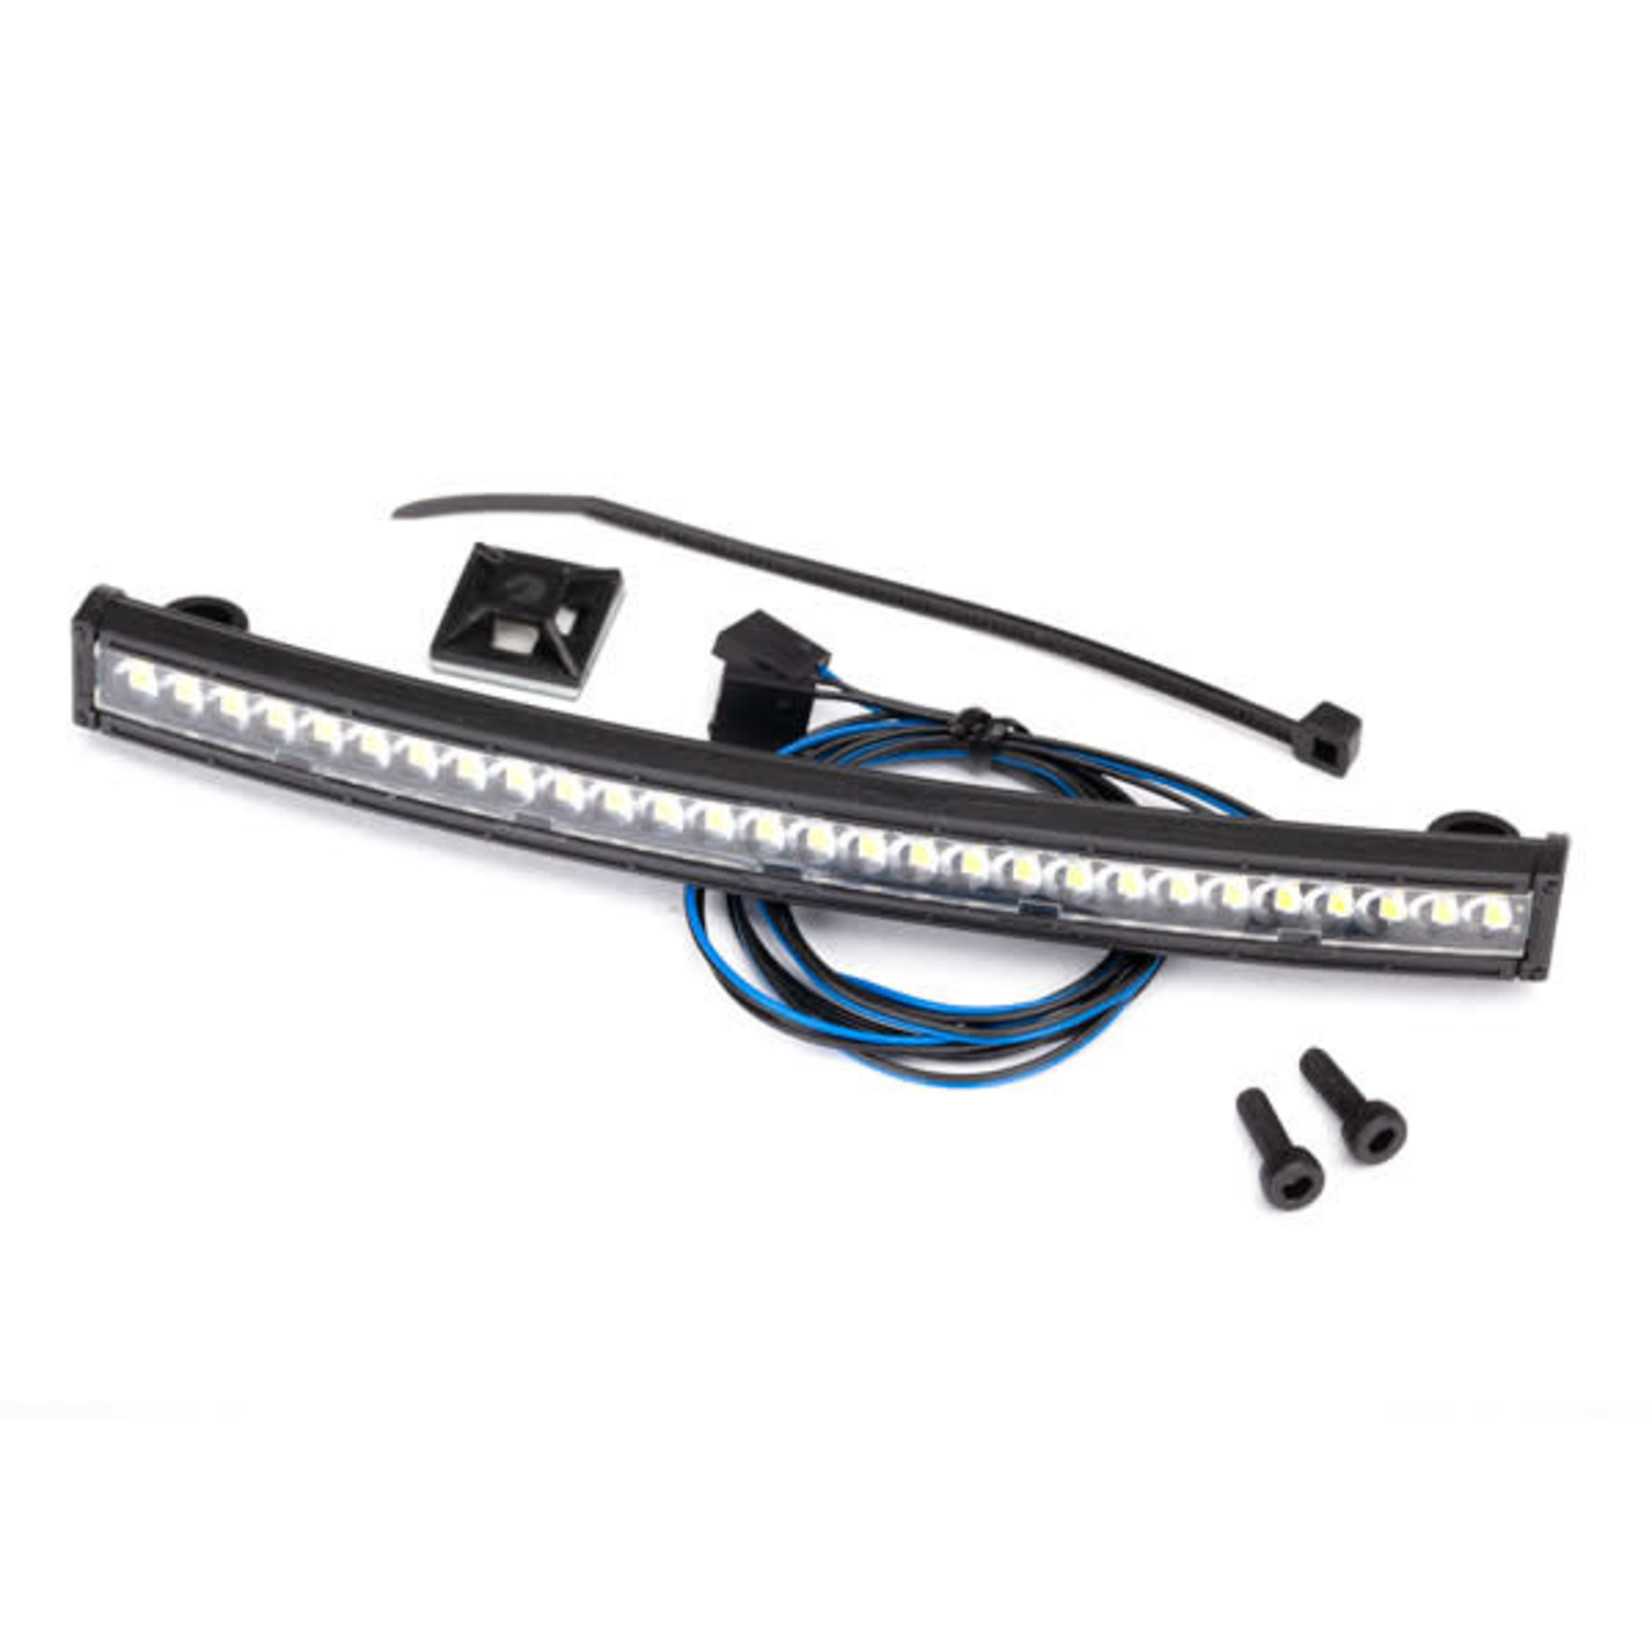 Traxxas LED Light Bar, Roof Lights (fits 8111 body)